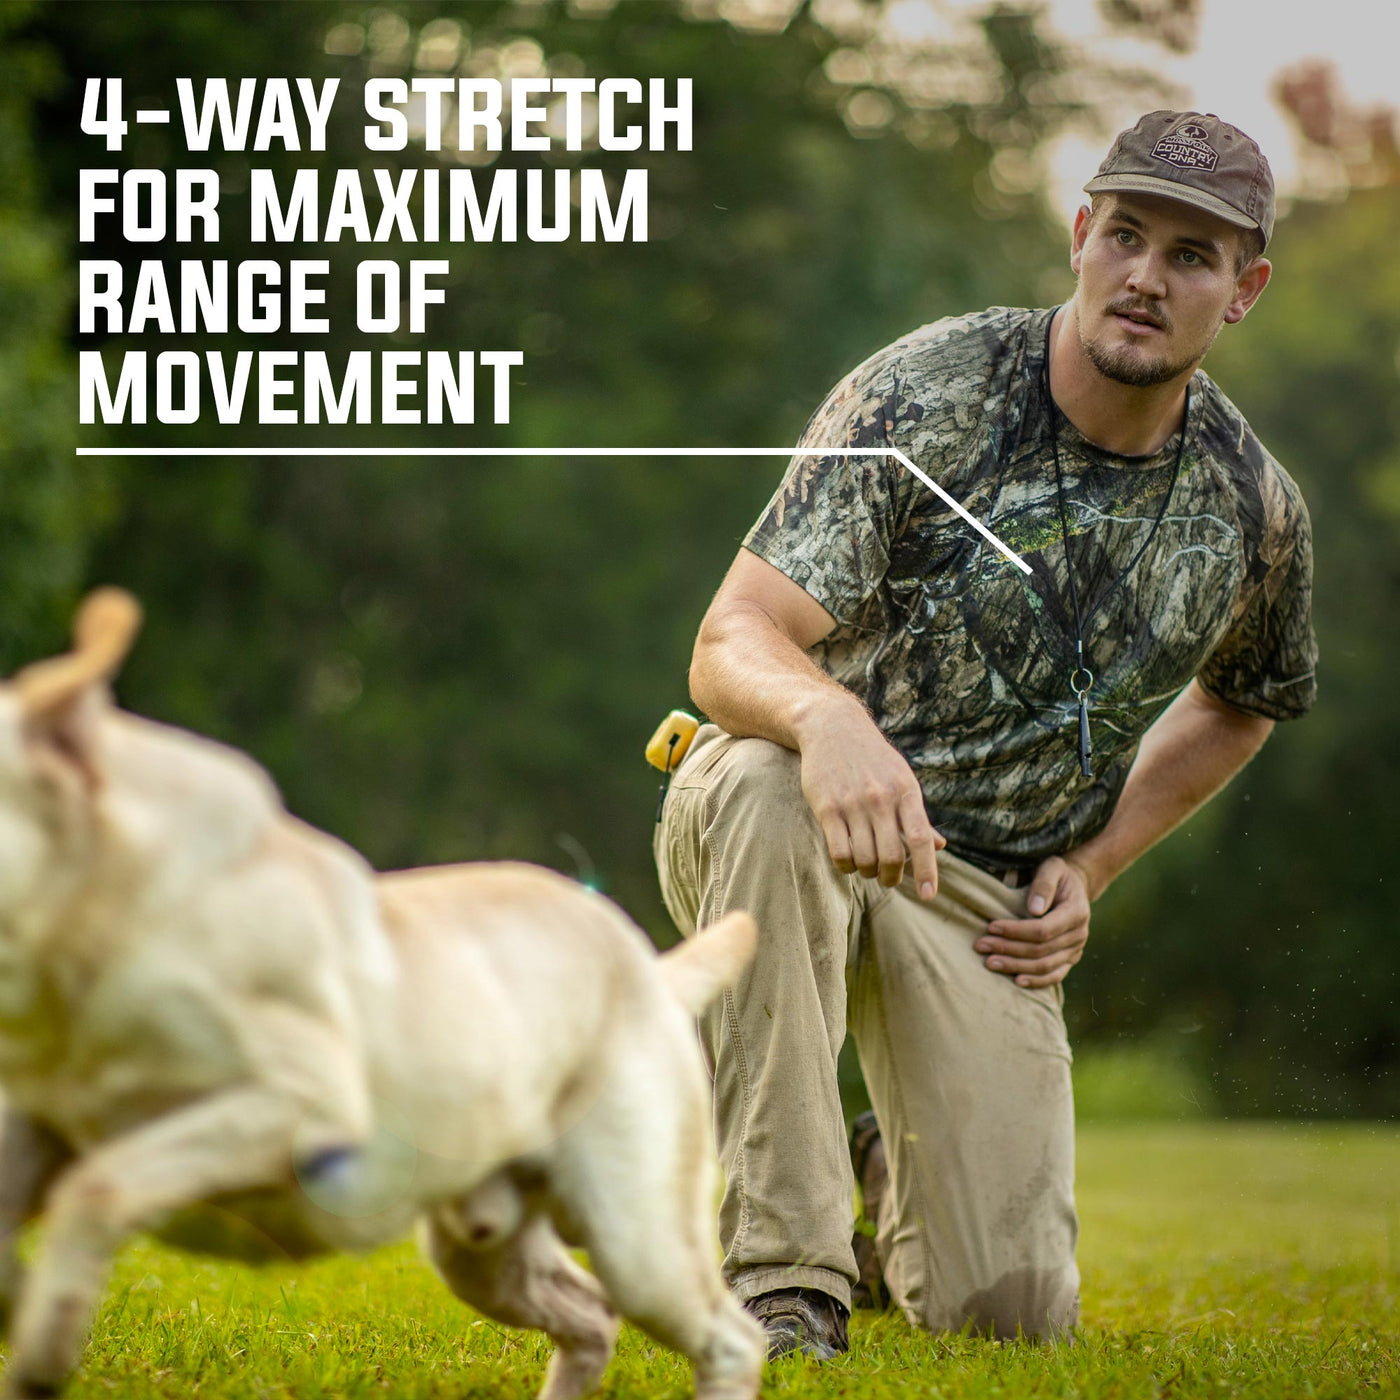 Mossy Oak Men's Tech Hunt Tee 4-way Stretch for Maximum Range of Movement